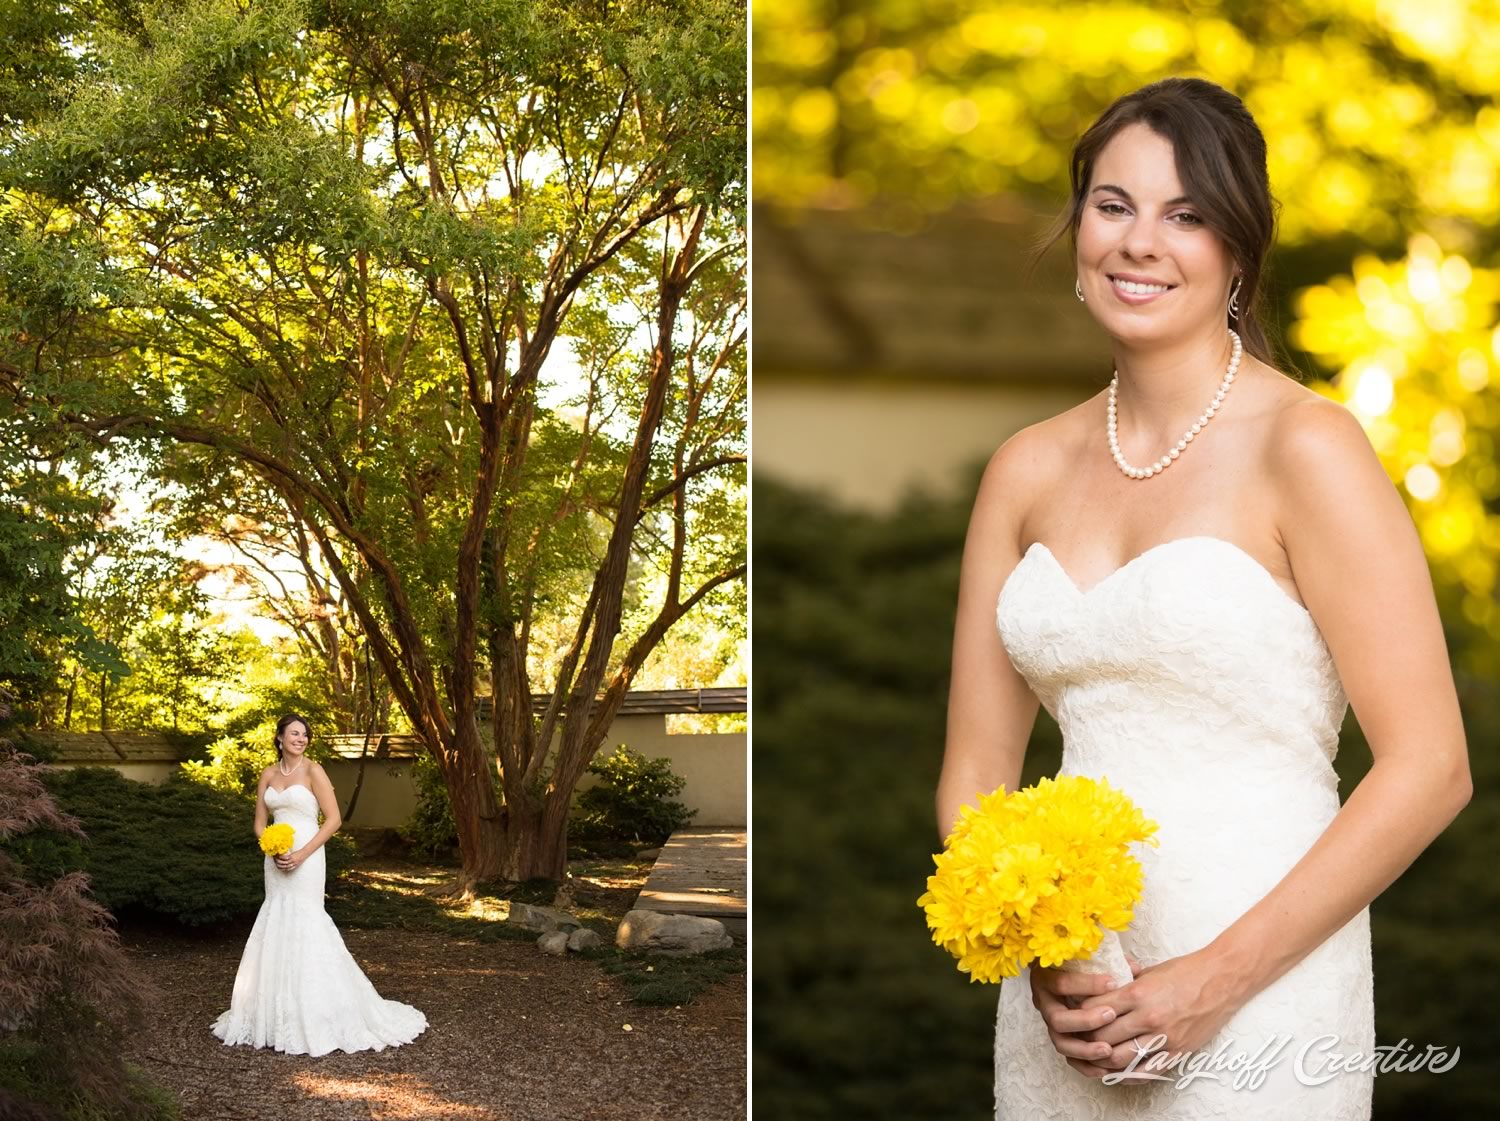 BridalSession-Bridals-RaleighBride-NCbride-JCRaulstonArboretum-RaleighWedding-WeddingPhotographer-LanghoffCreative-Amy2015-Bride-2-photo.jpg